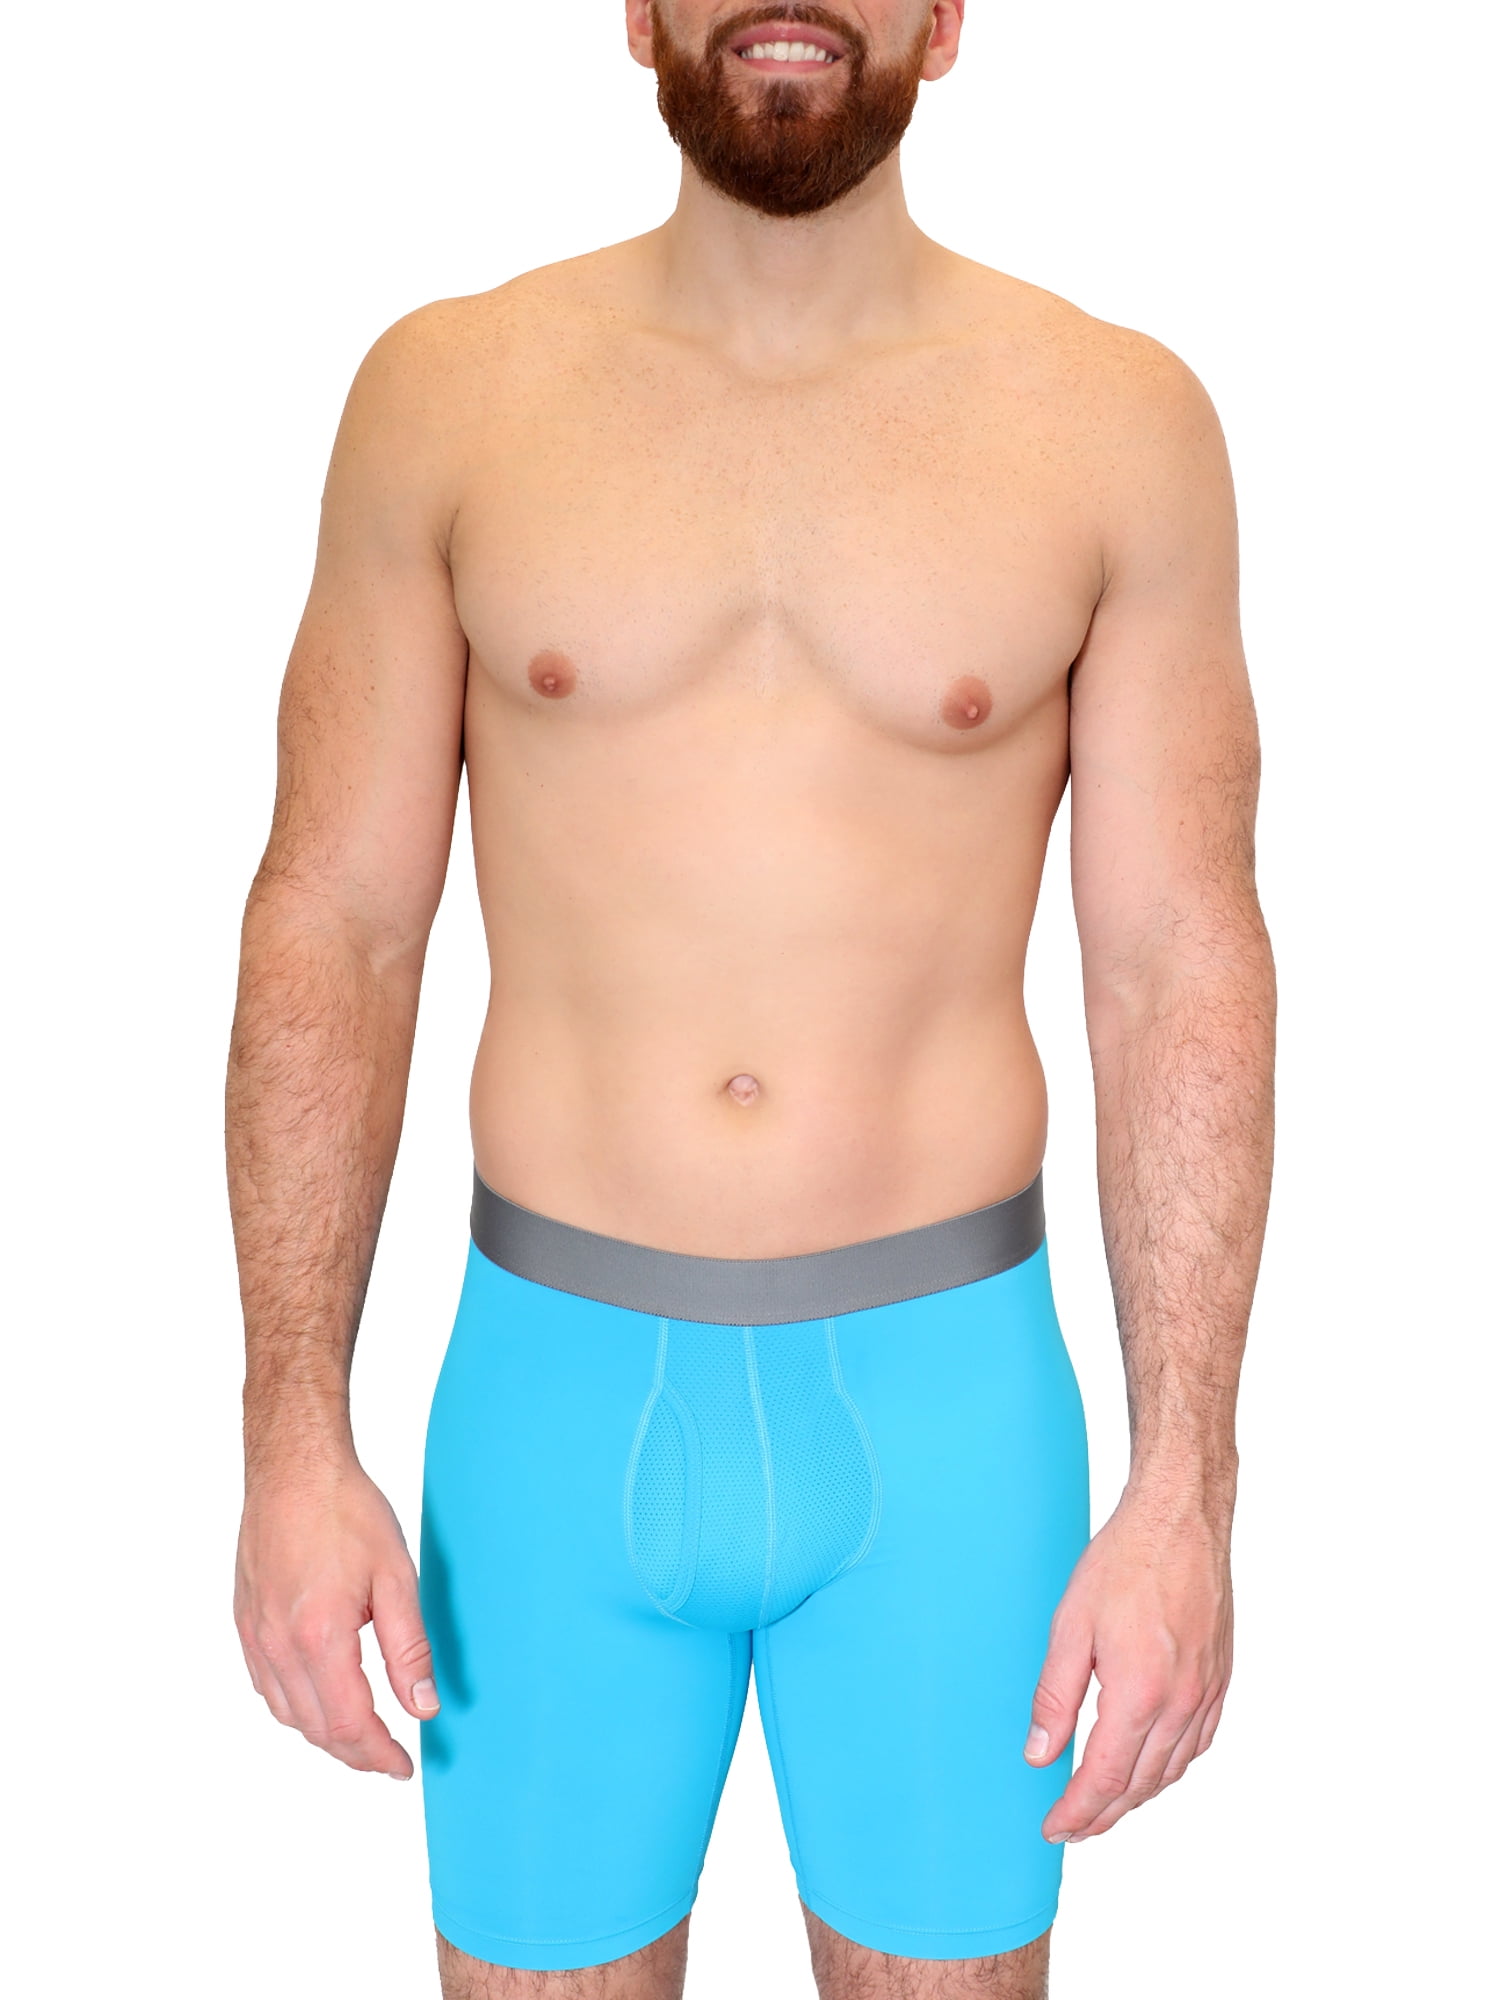 Athletic Works Men's Long Leg Boxer Briefs Underwear, 3 Pack